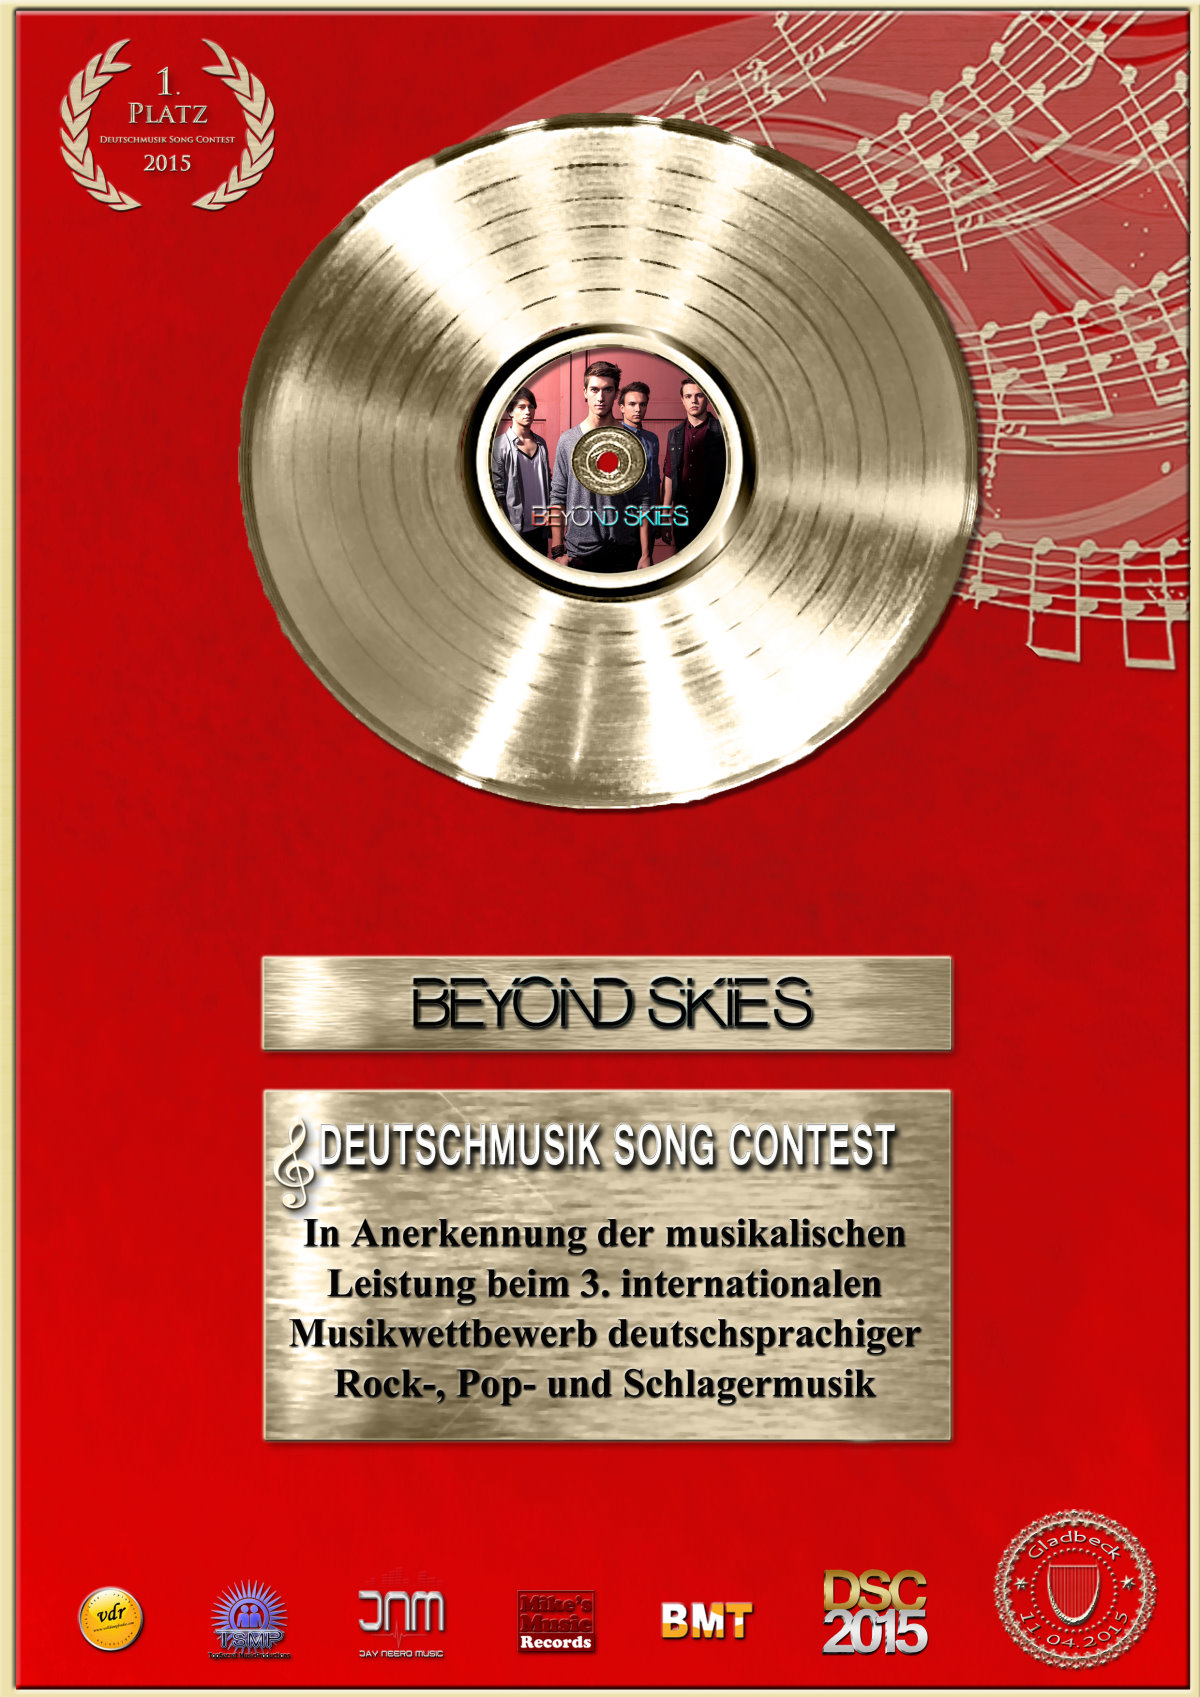 Casting Portal News | Deutschmusik-Song-Contest-Award 